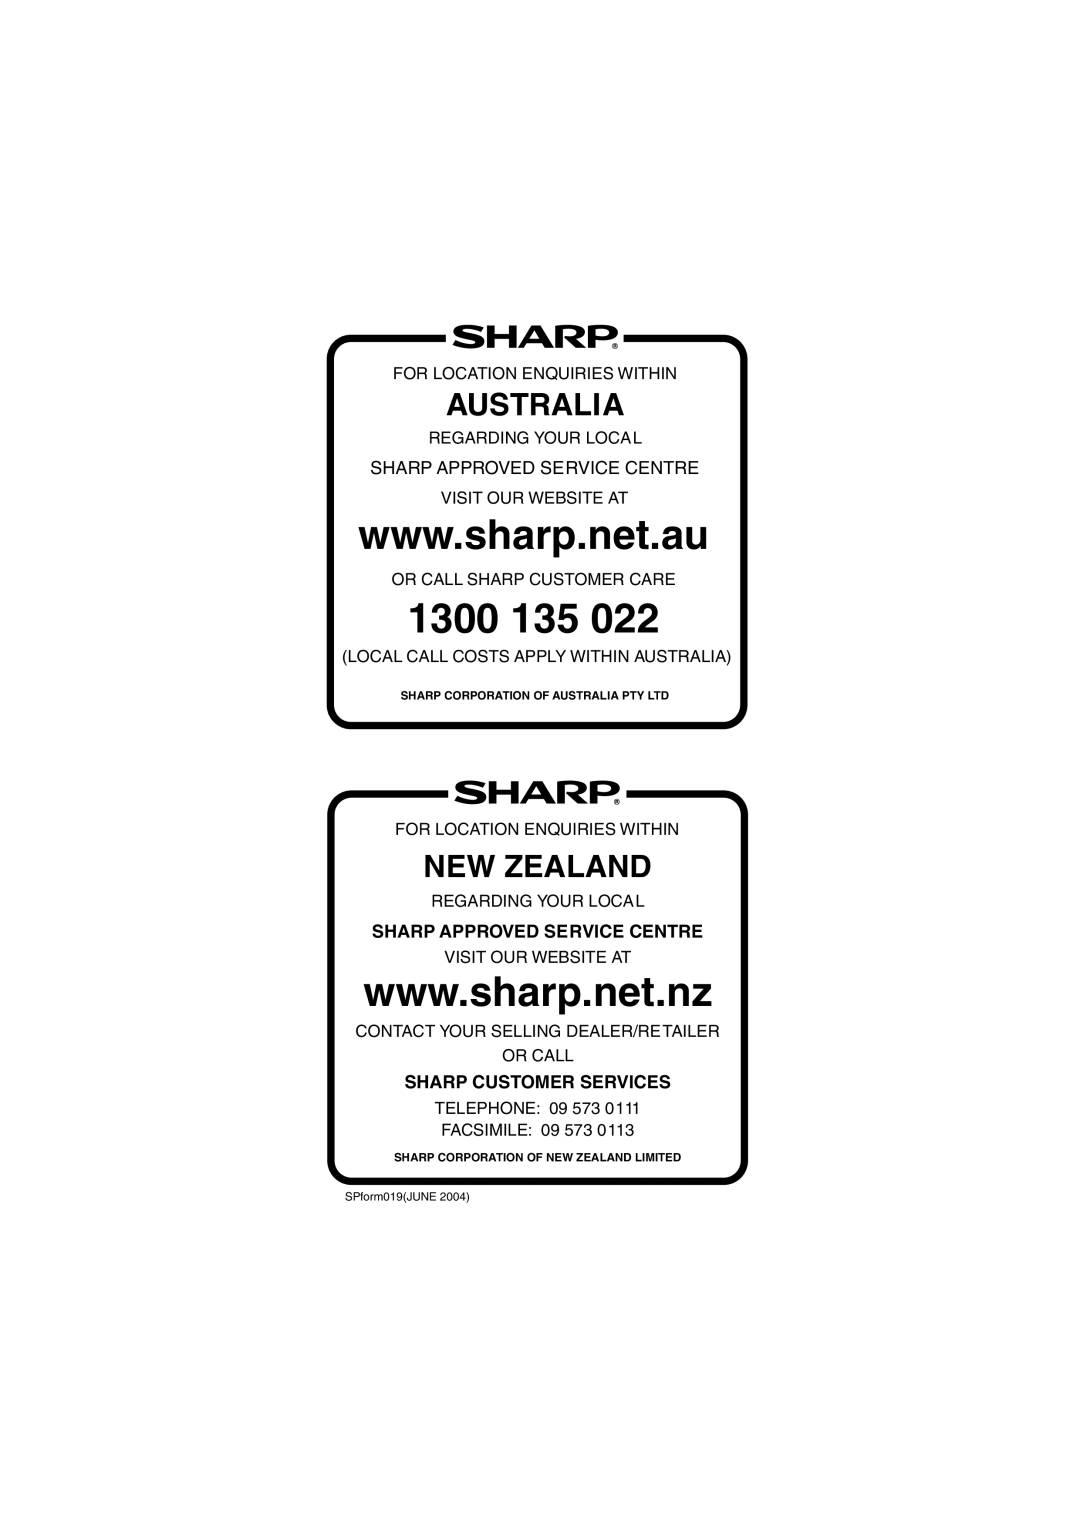 Sharp XL-DAB151PH(BK), XL-DAB151PH(S) Sharp Approved Service Centre, Sharp Customer Services, 1300, Australia, New Zealand 